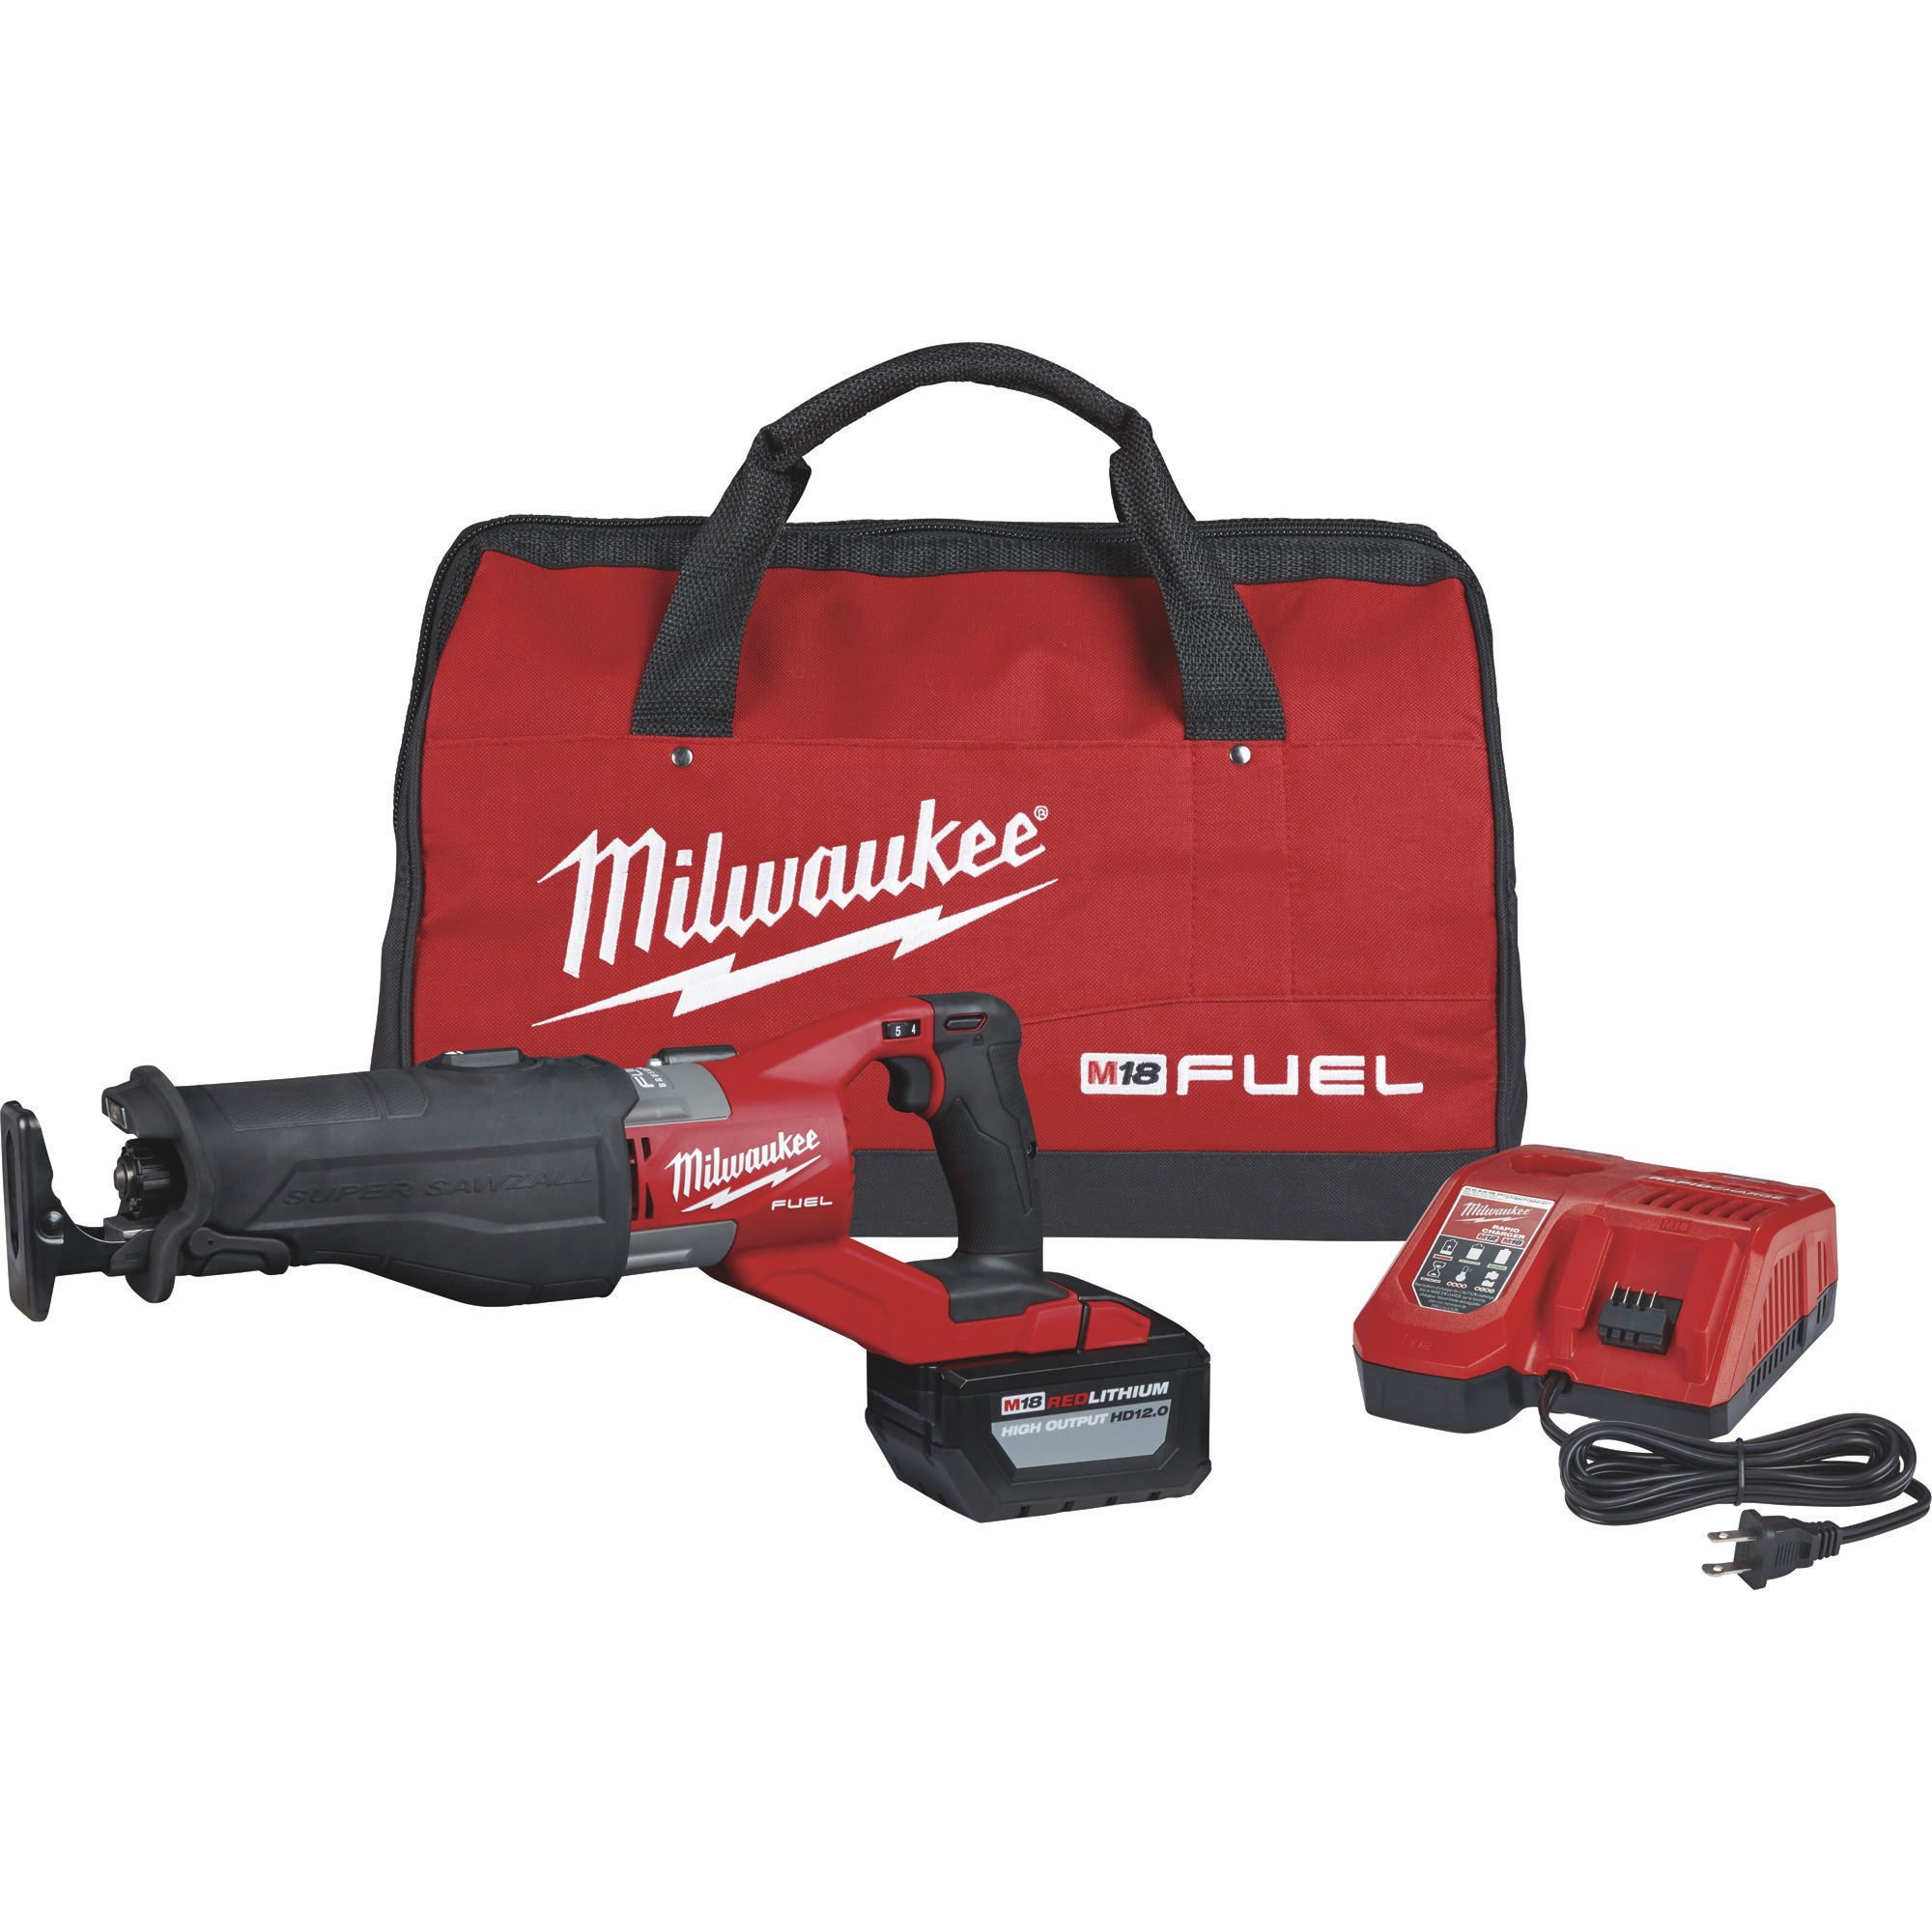 Milwaukee M18 FUEL Super Sawzall Reciprocating Saw Kit, 1 High Output HD12.0 Battery, Model 2722-21HD